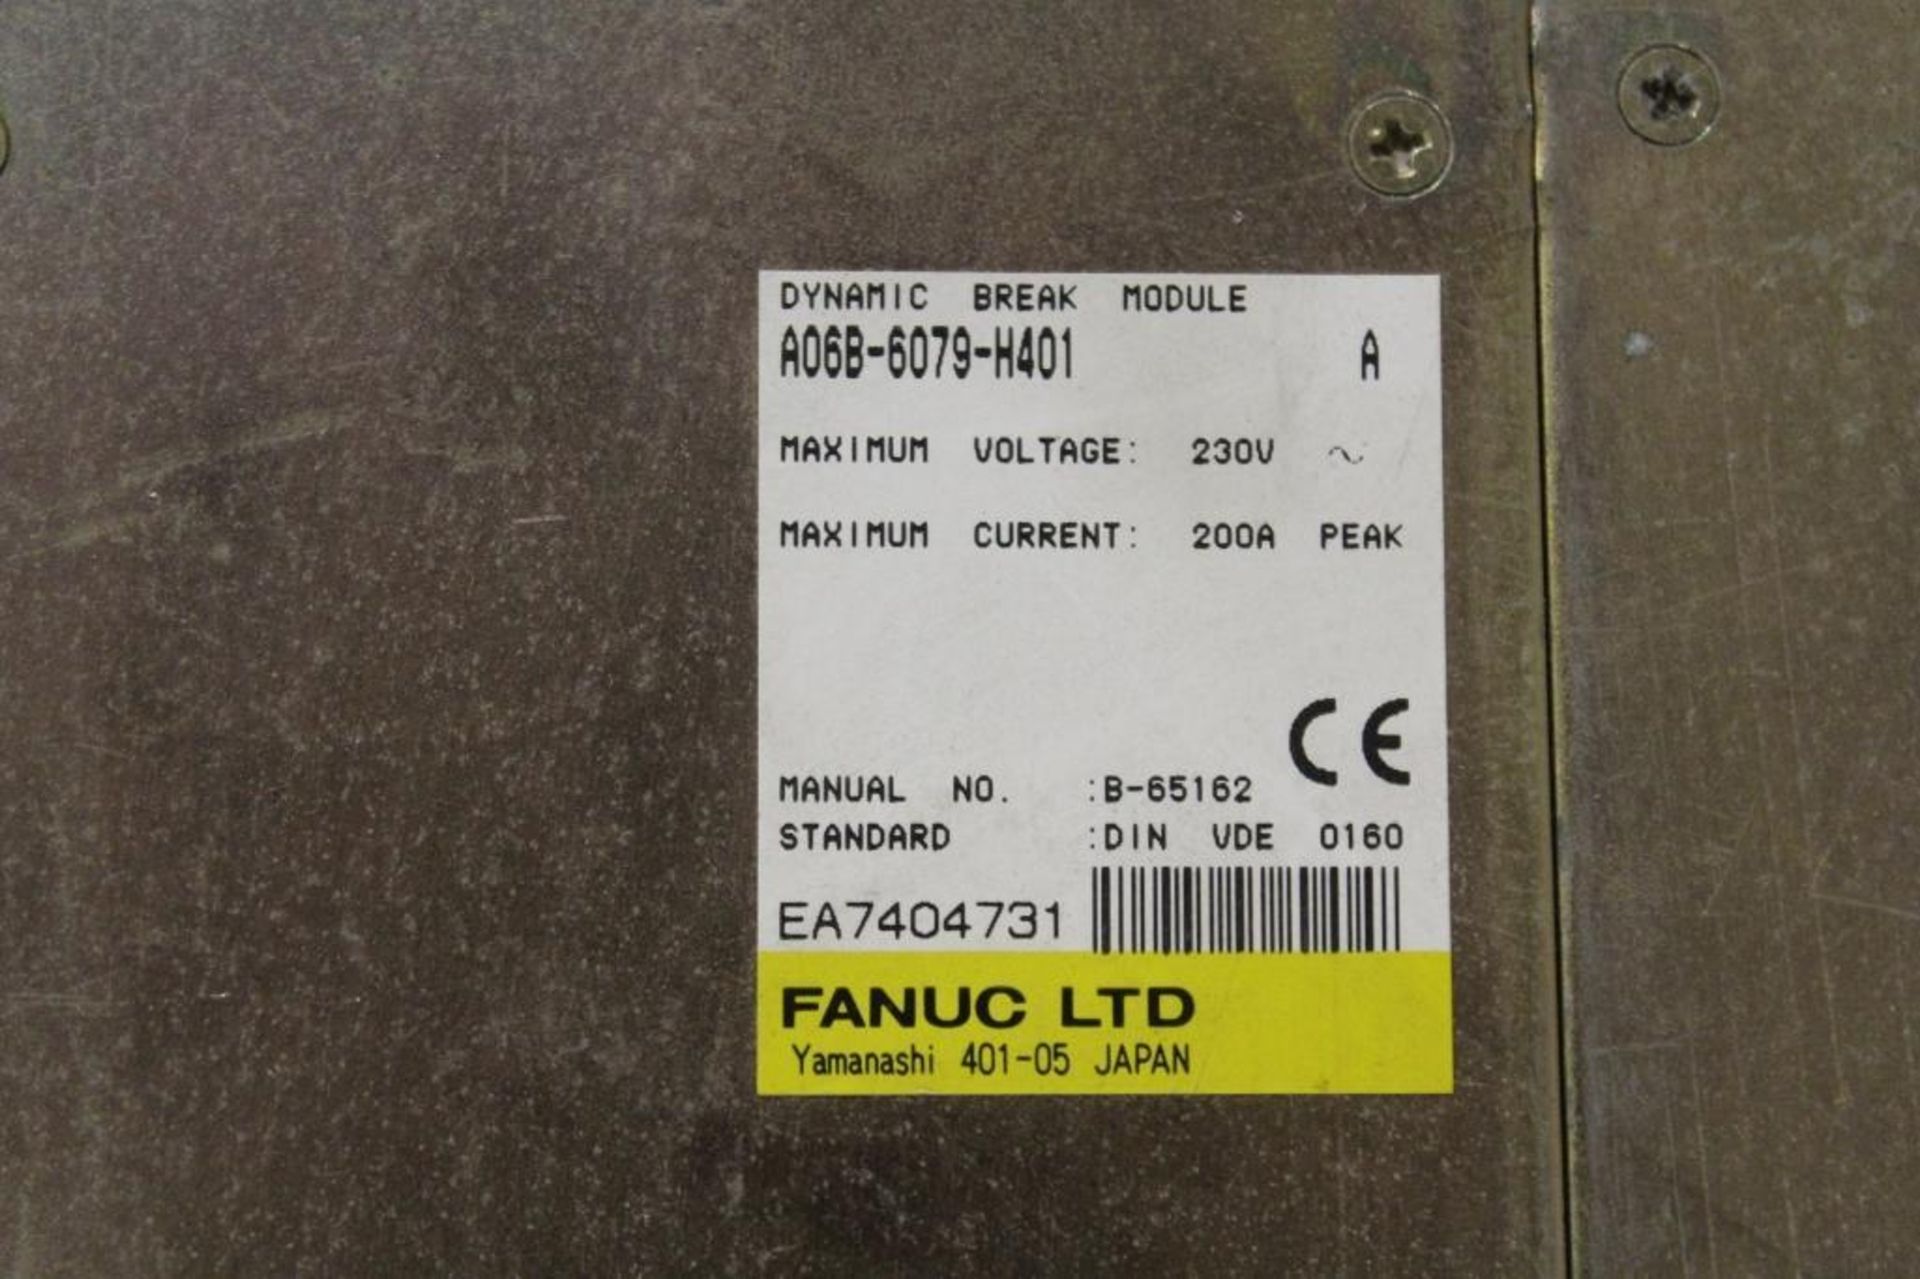 (Lot of 5) Fanuc A06B-6079-H401 Dynamic Brake Modules - Image 2 of 2